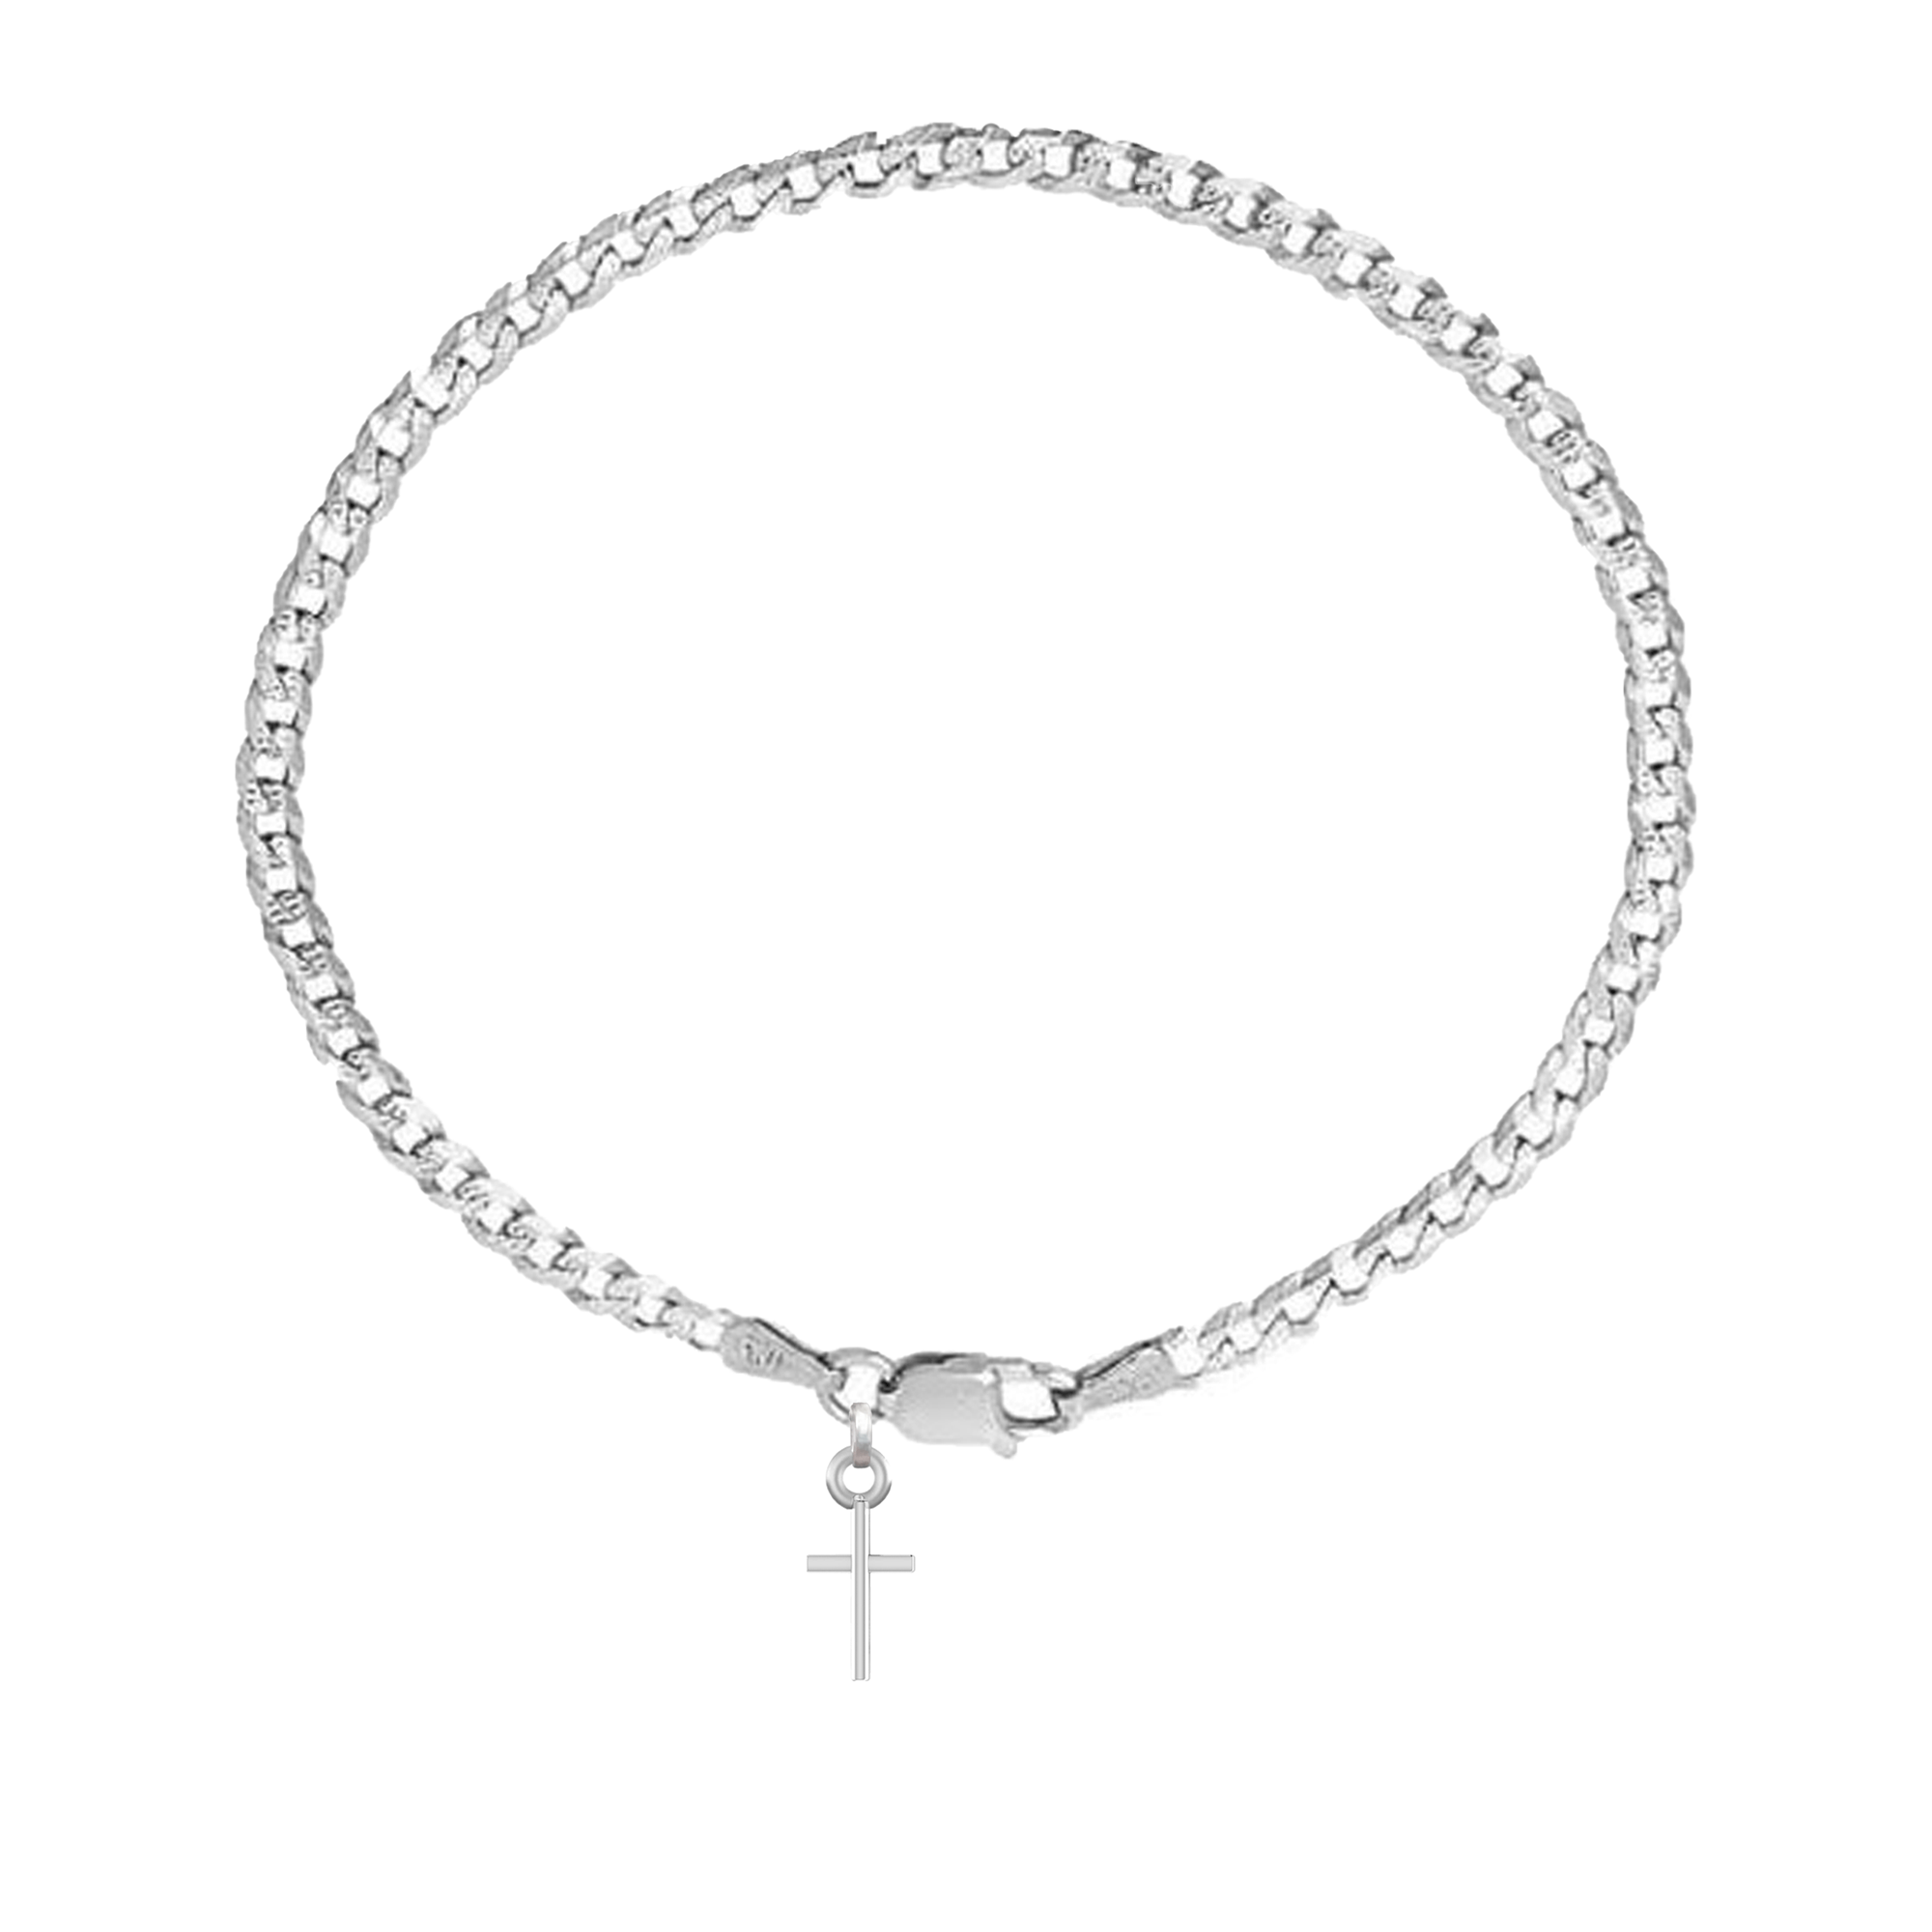 Akshat Sapphire 92.5% pure Sterling Silver Curb Designer Bracelet with Charm Jesus for Men & Boys